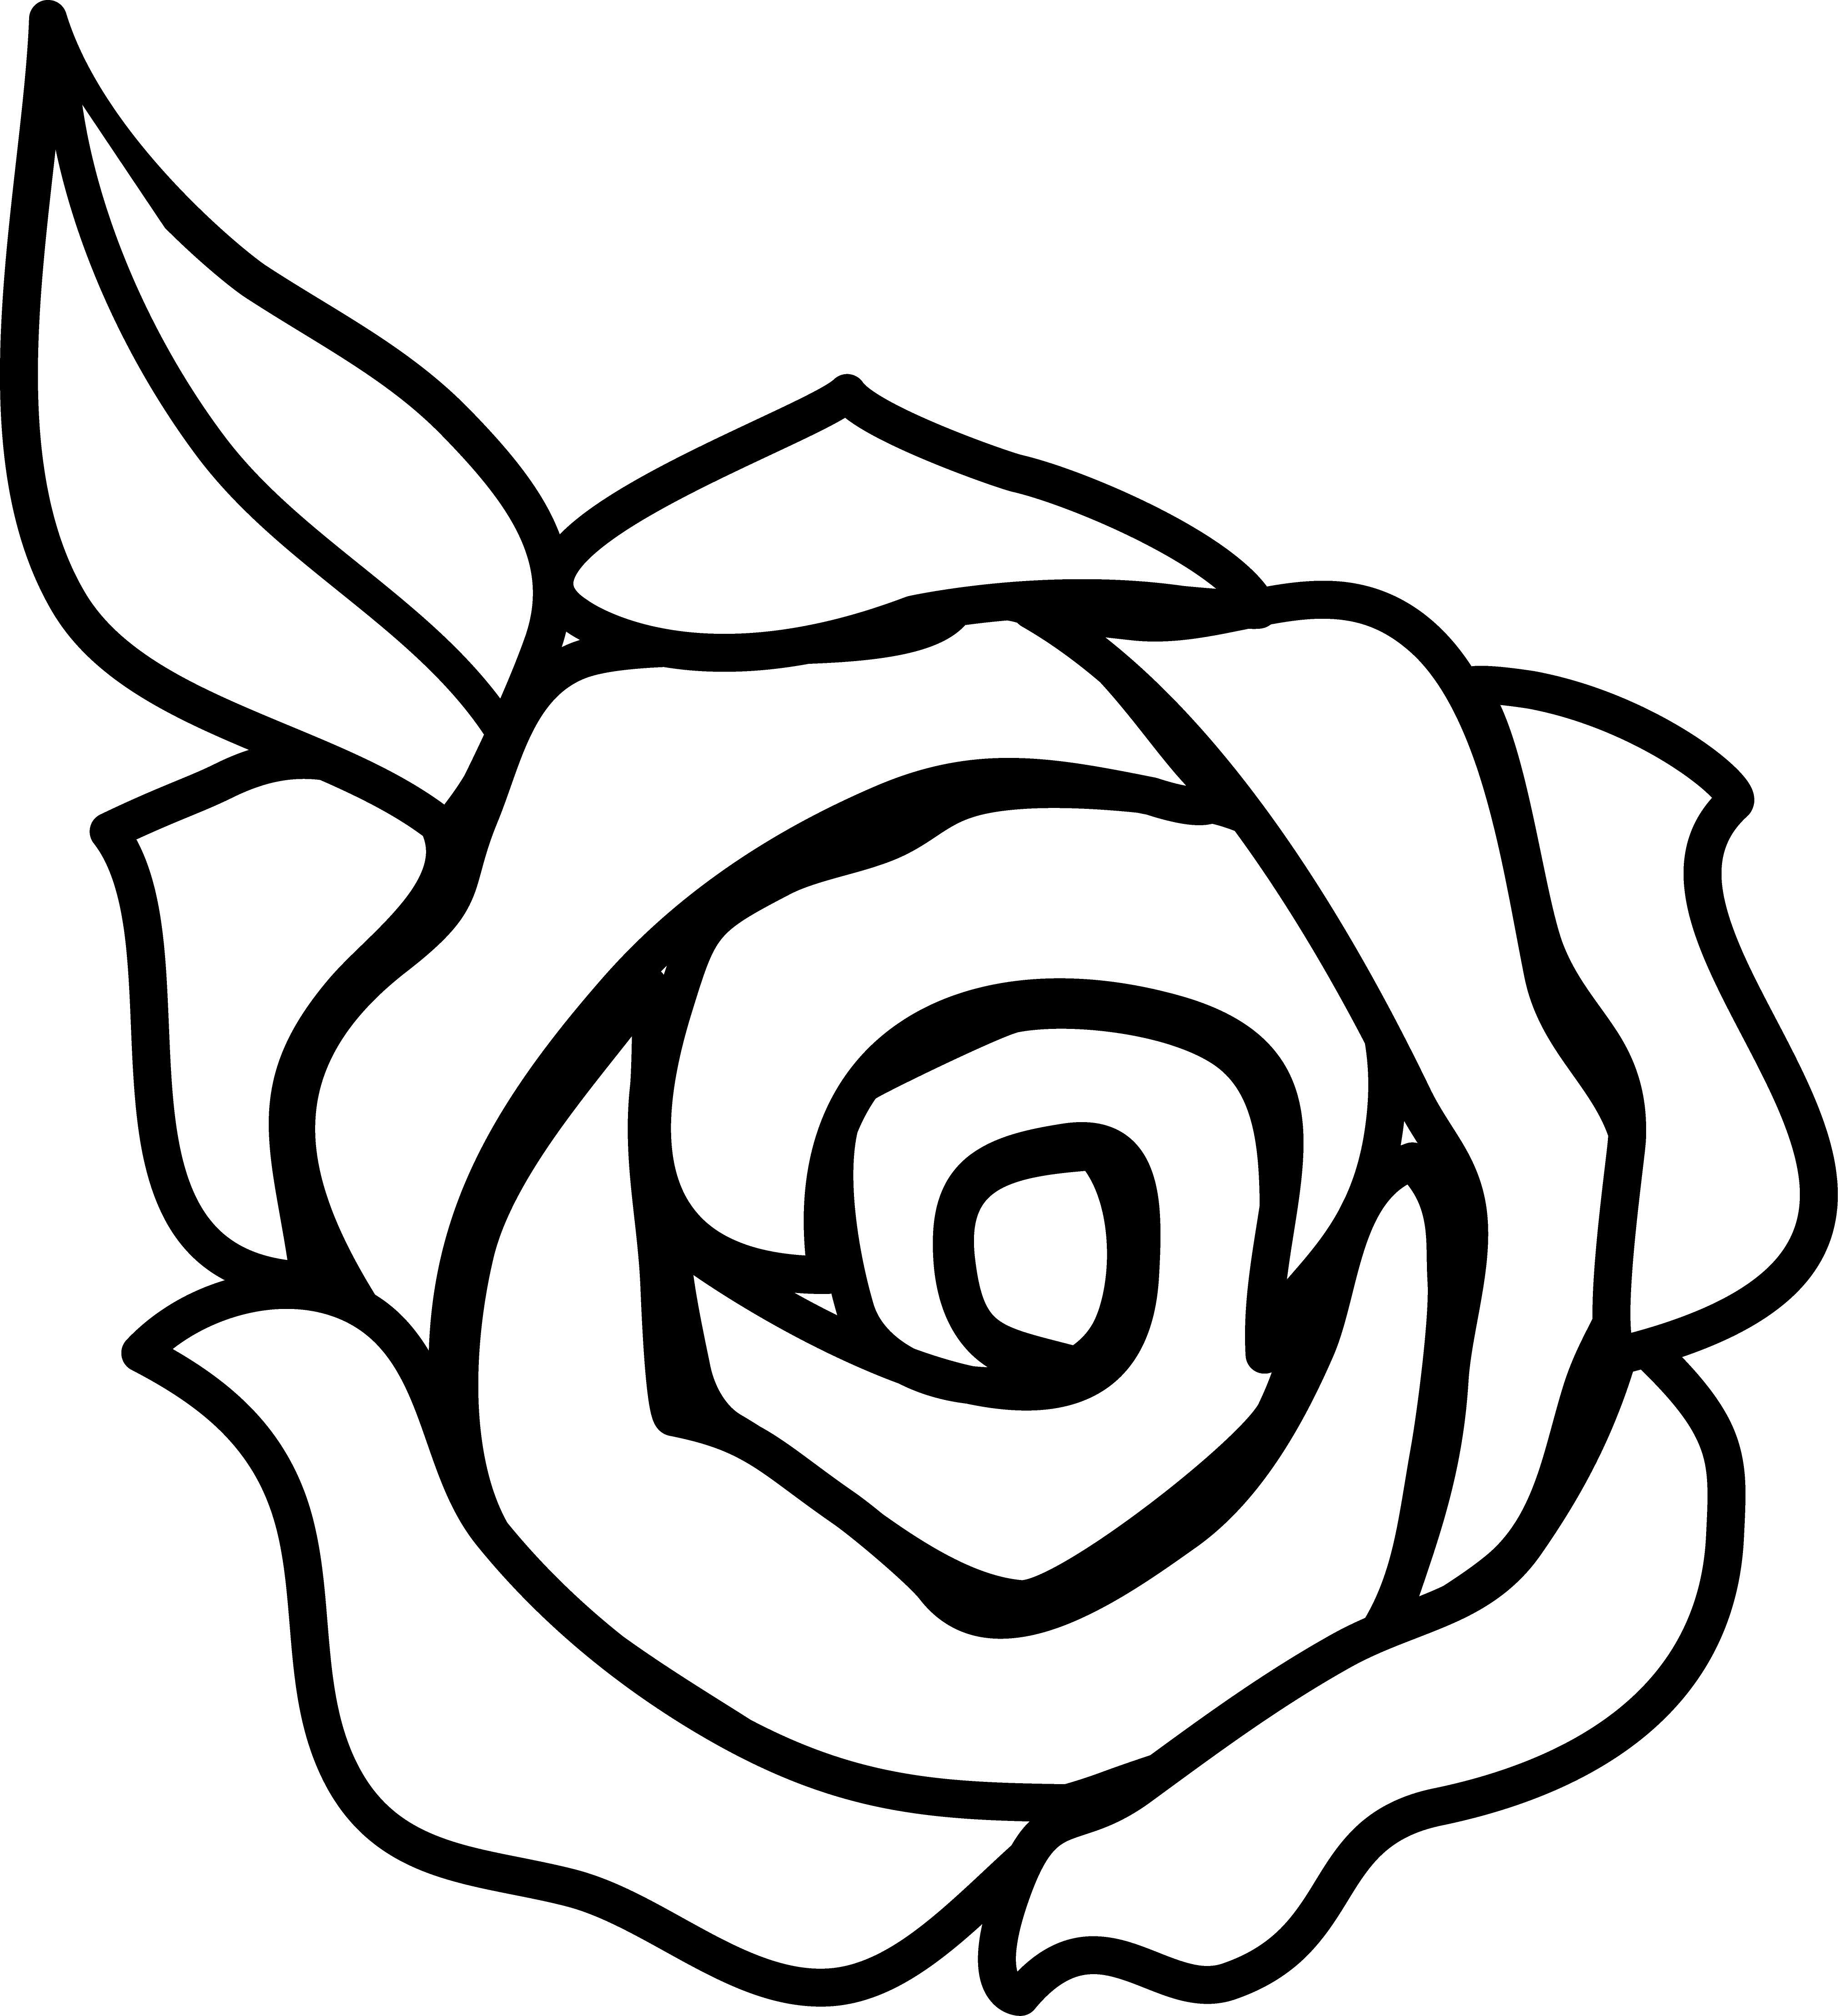 Beautiful white rose - csp649